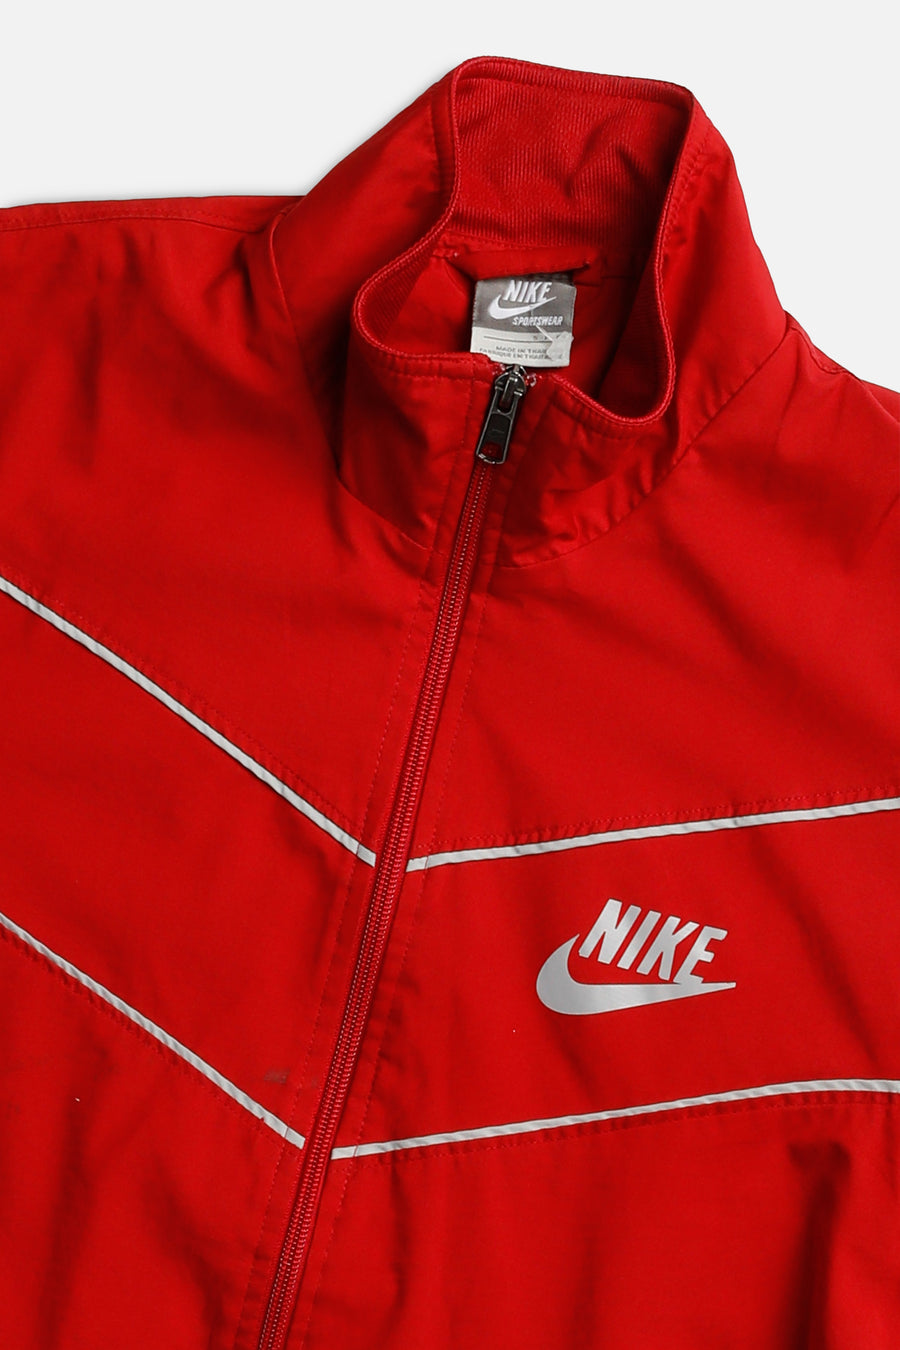 Vintage Nike Windbreaker Jacket - S